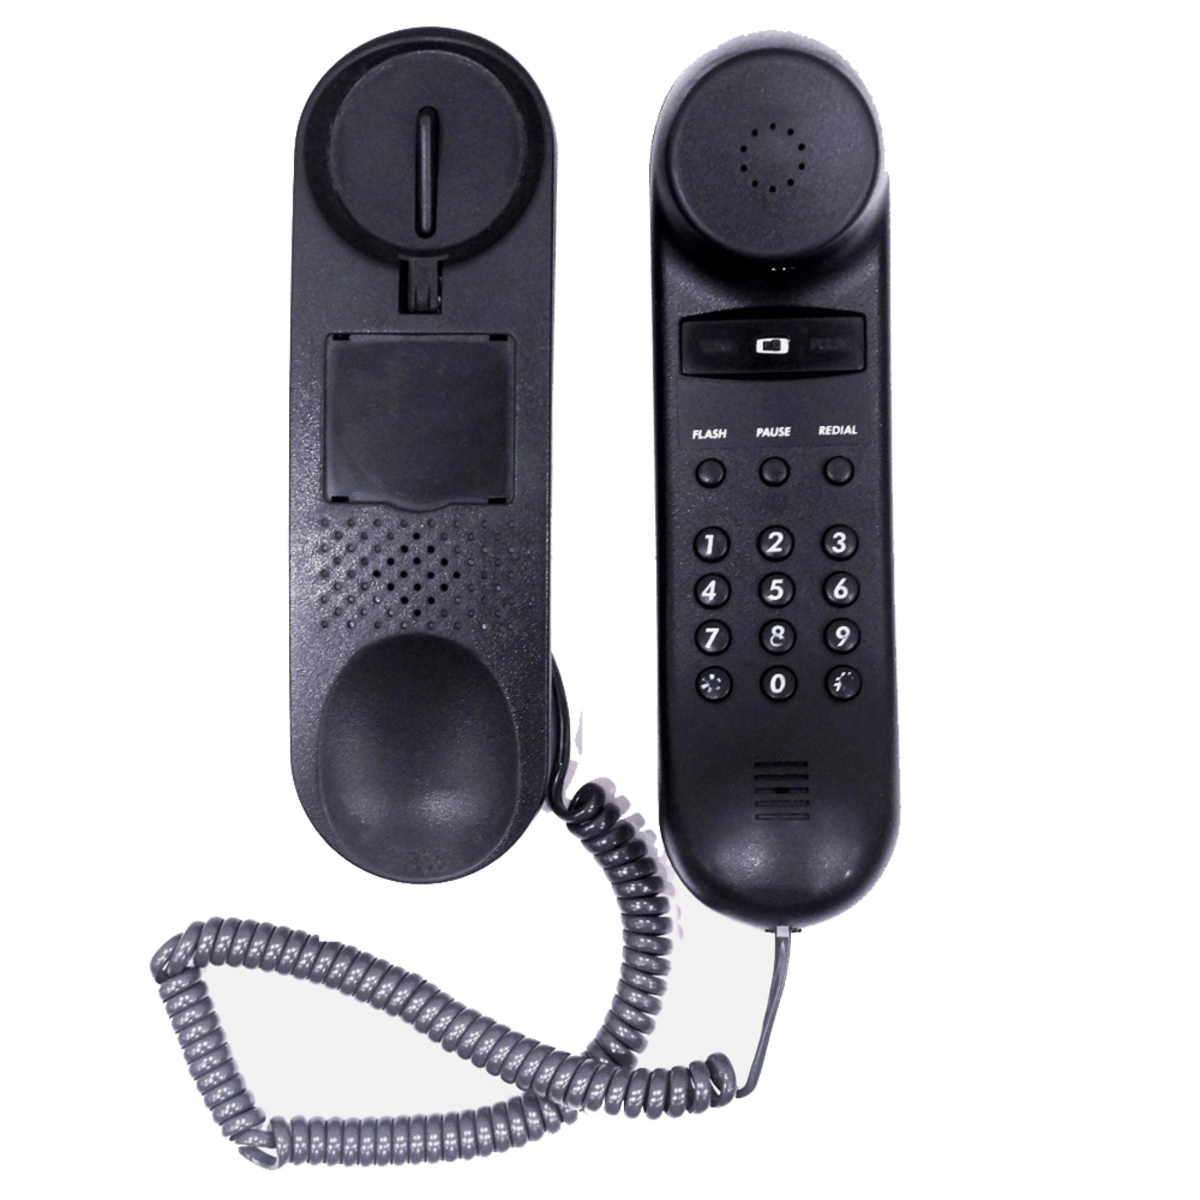 Beetel Telephone B25 Black